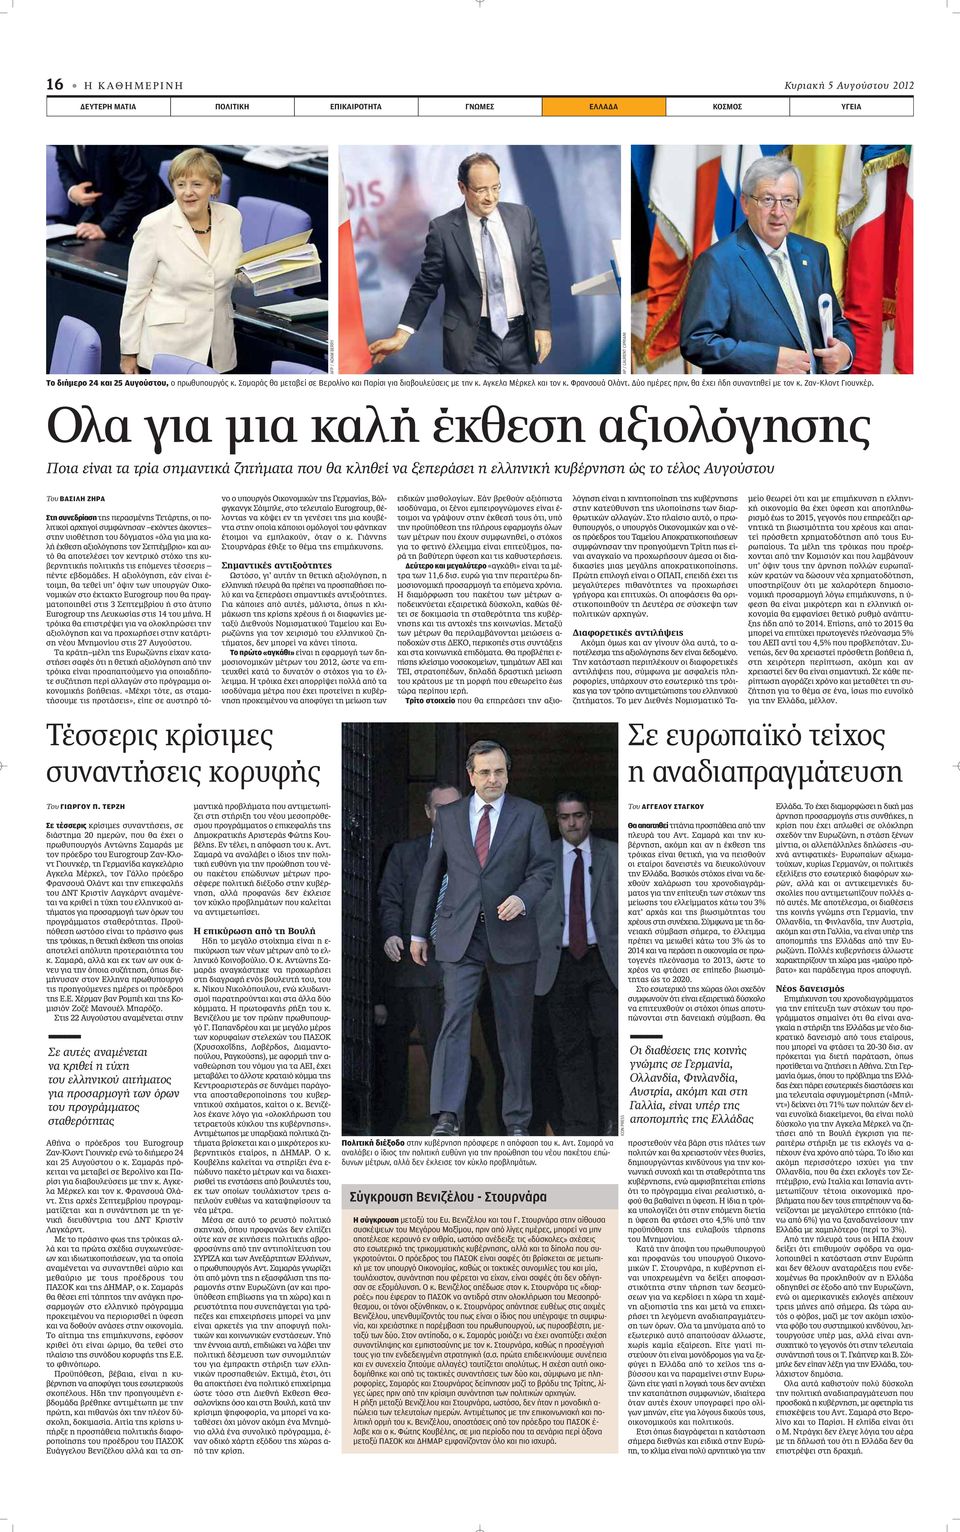 AP / LAURENT CIPRIANI Ολα για μια καλή έκθεση αξιολόγησης Ποια είναι τα τρία σημαντικά ζητήματα που θα κληθεί να ξεπεράσει η ελληνική κυβέρνηση ώς το τέλος Αυγούστου Του ΒΑΣΙΛΗ ΖΗΡΑ Στη συνεδρίαση ÙË